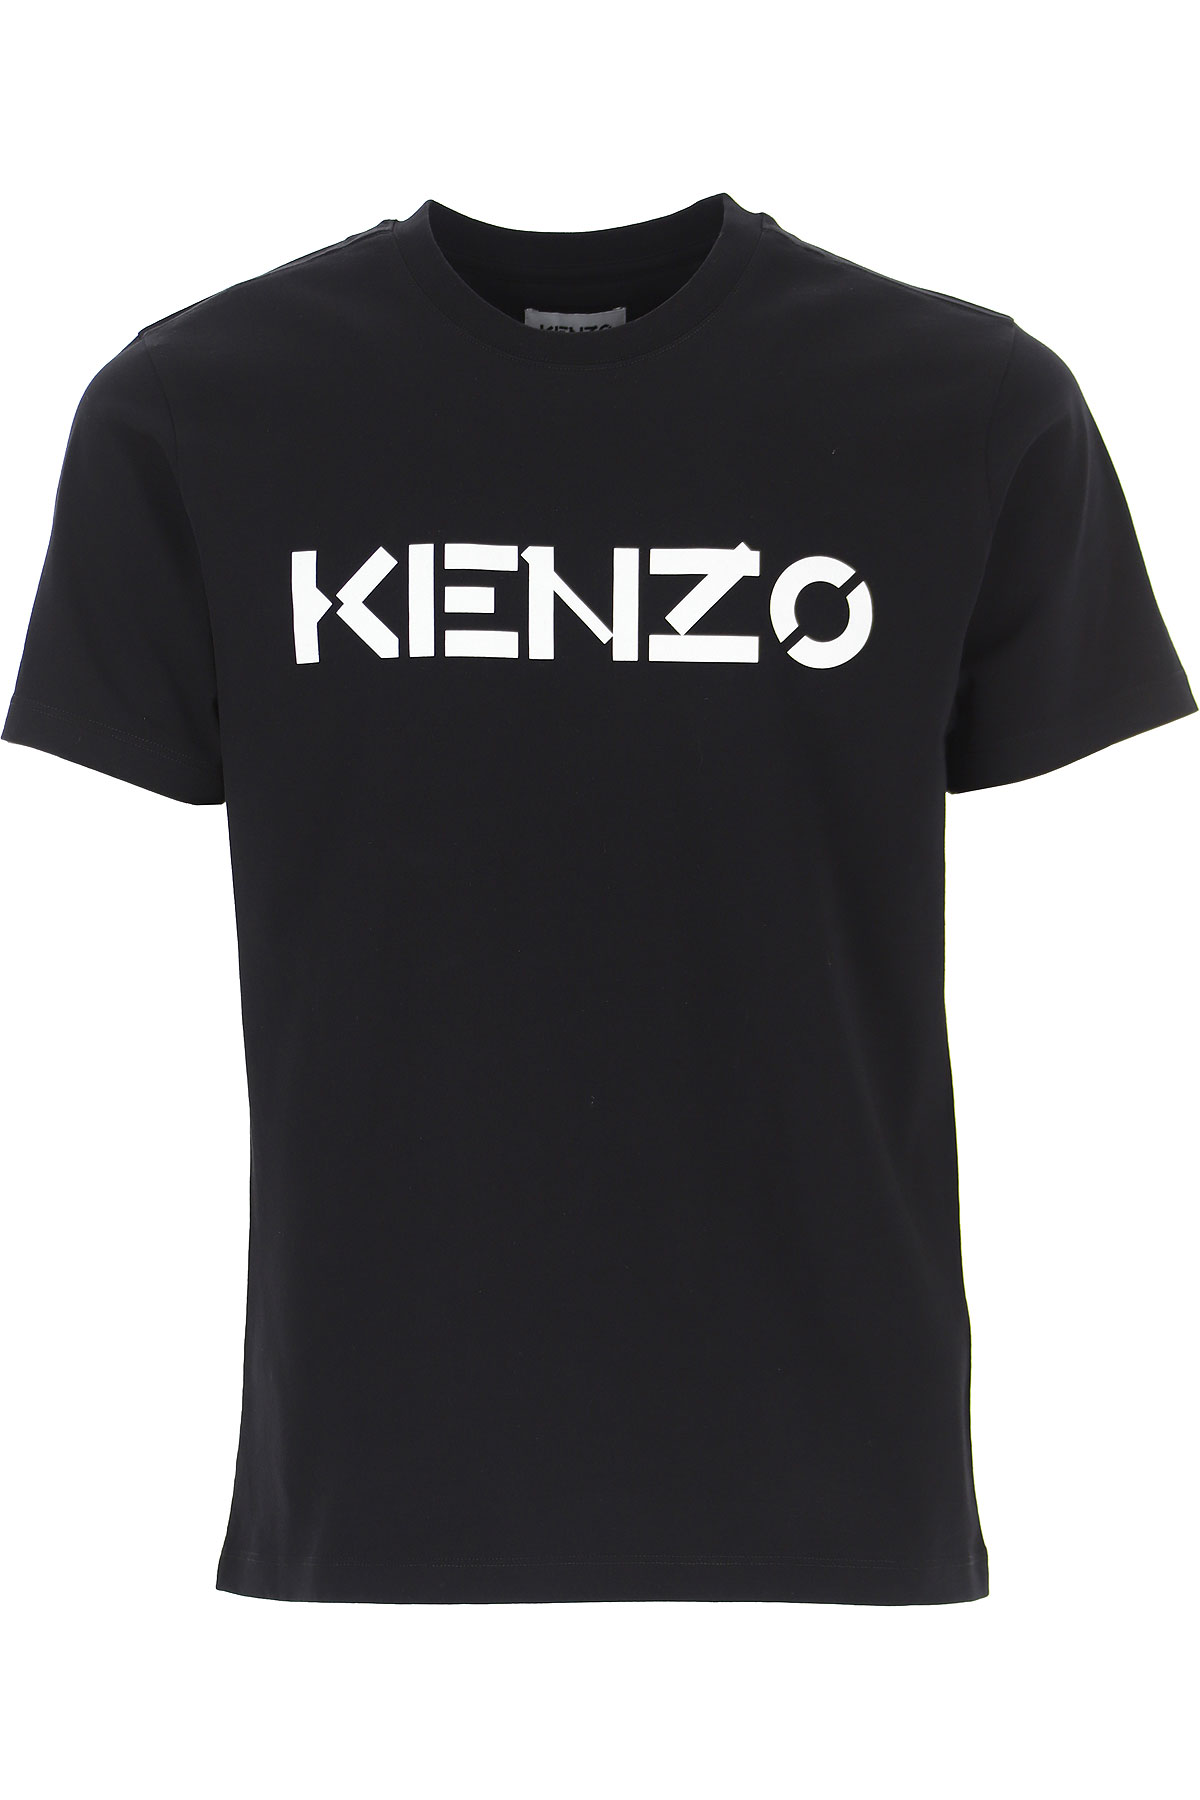 kenzo men t shirt sale